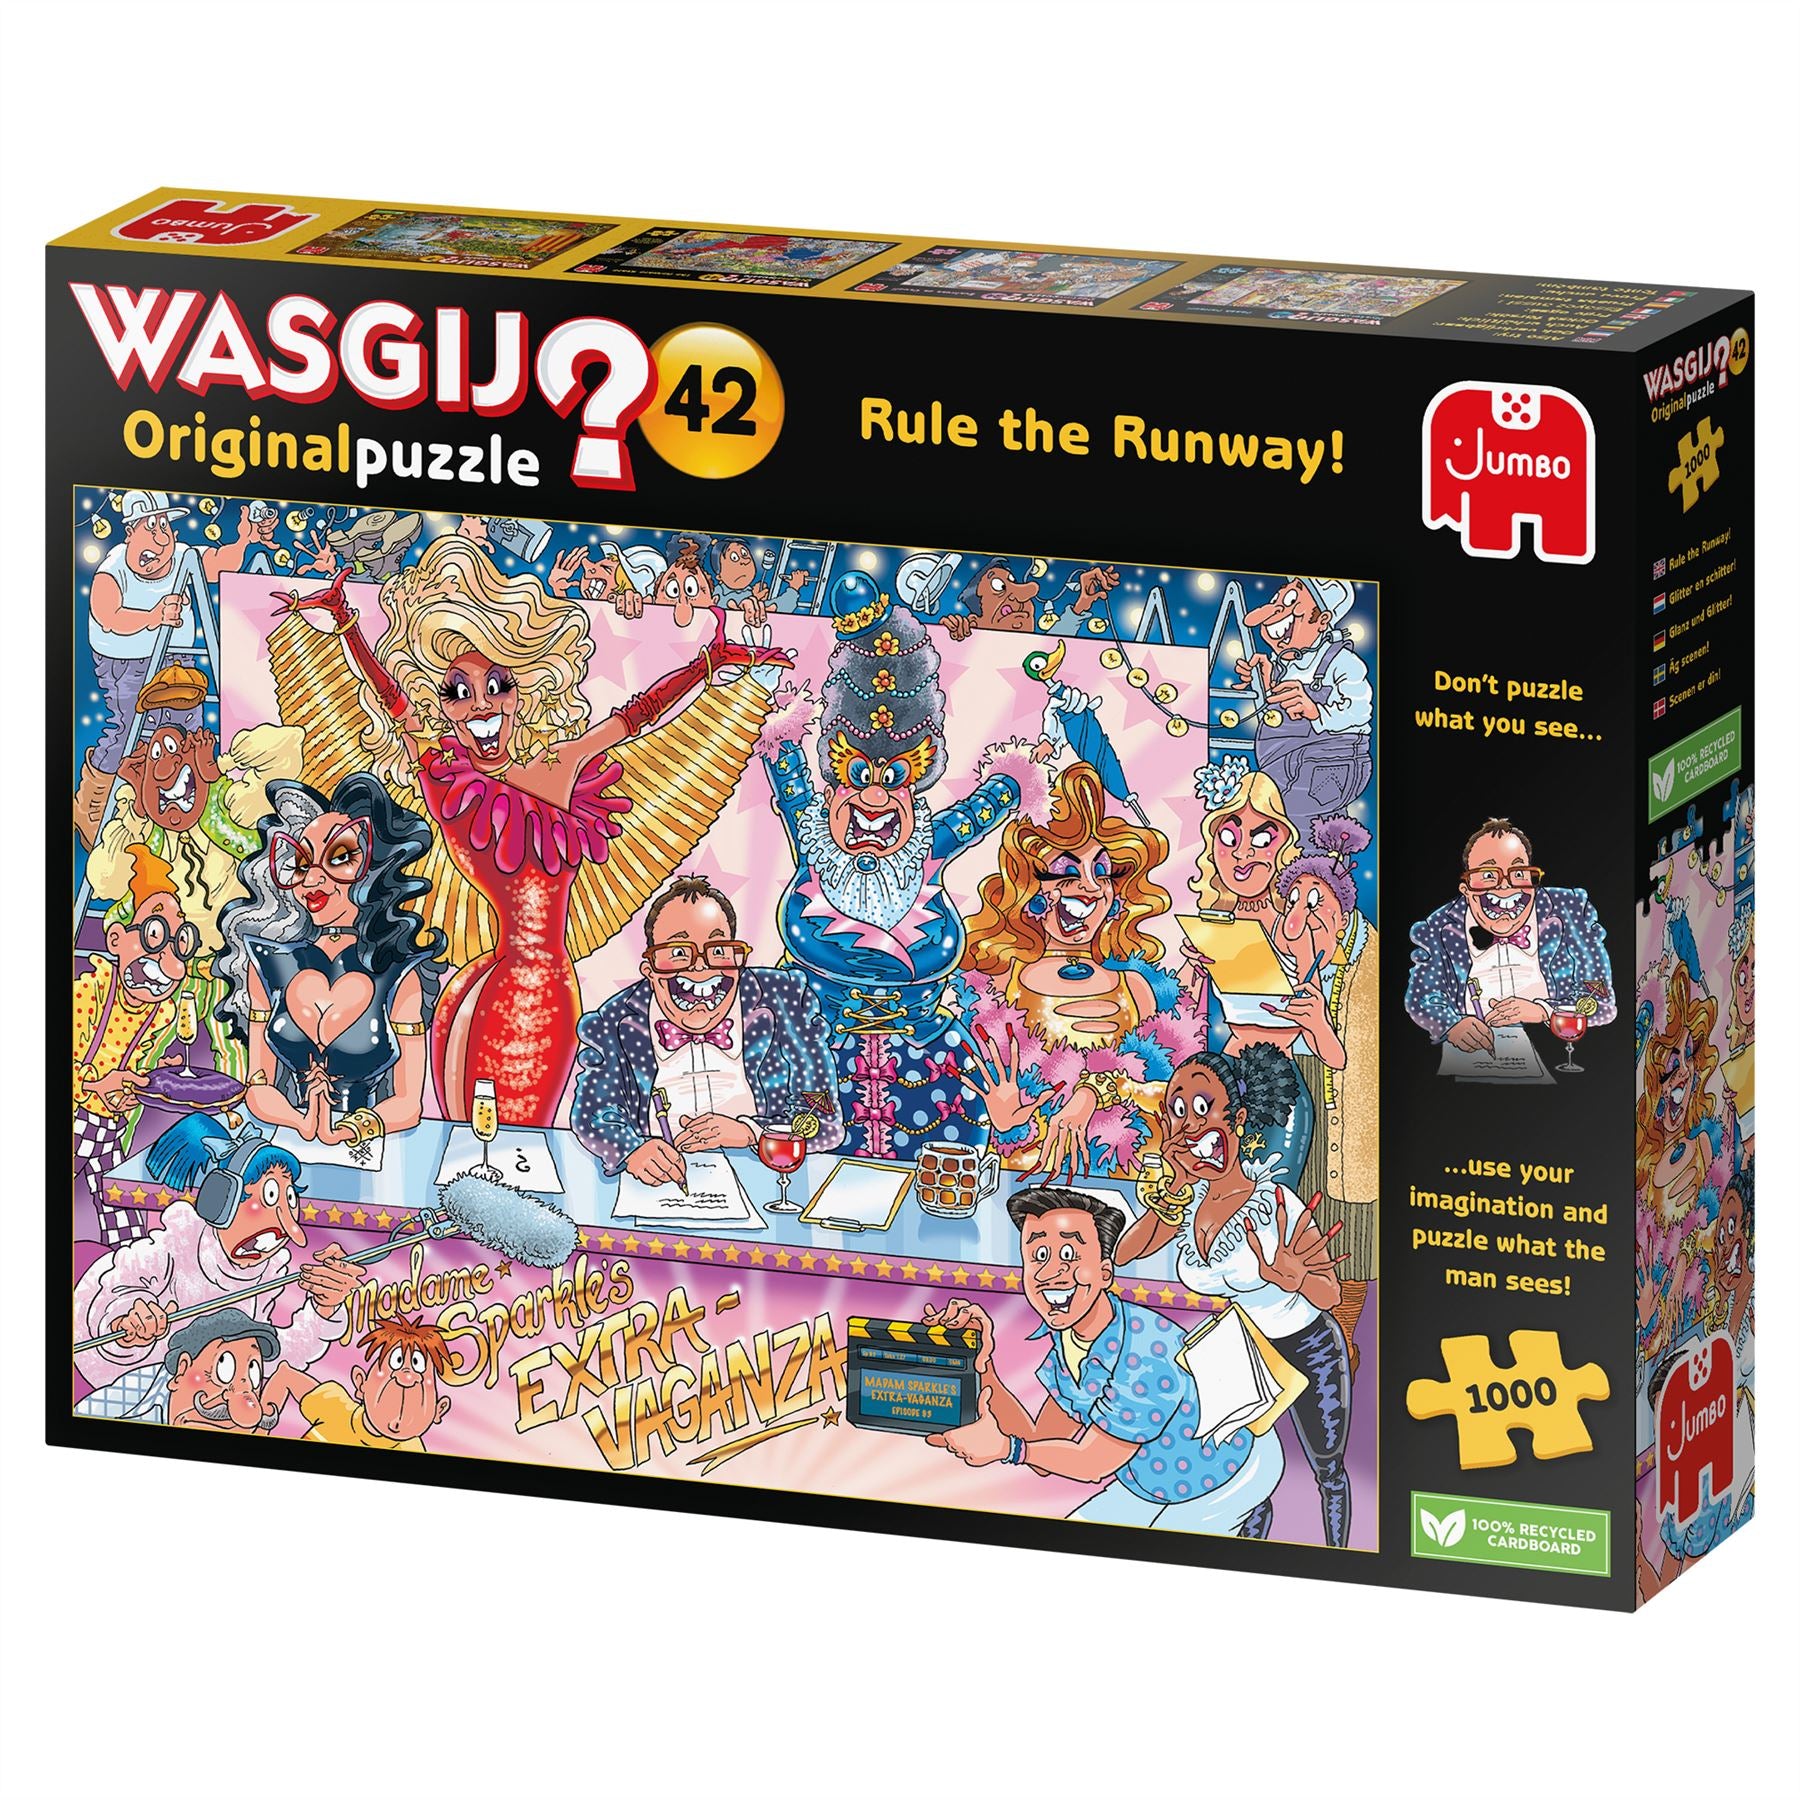 Wasgij Original 42 Rule the Runway! 1000 Piece Jigsaw Puzzle